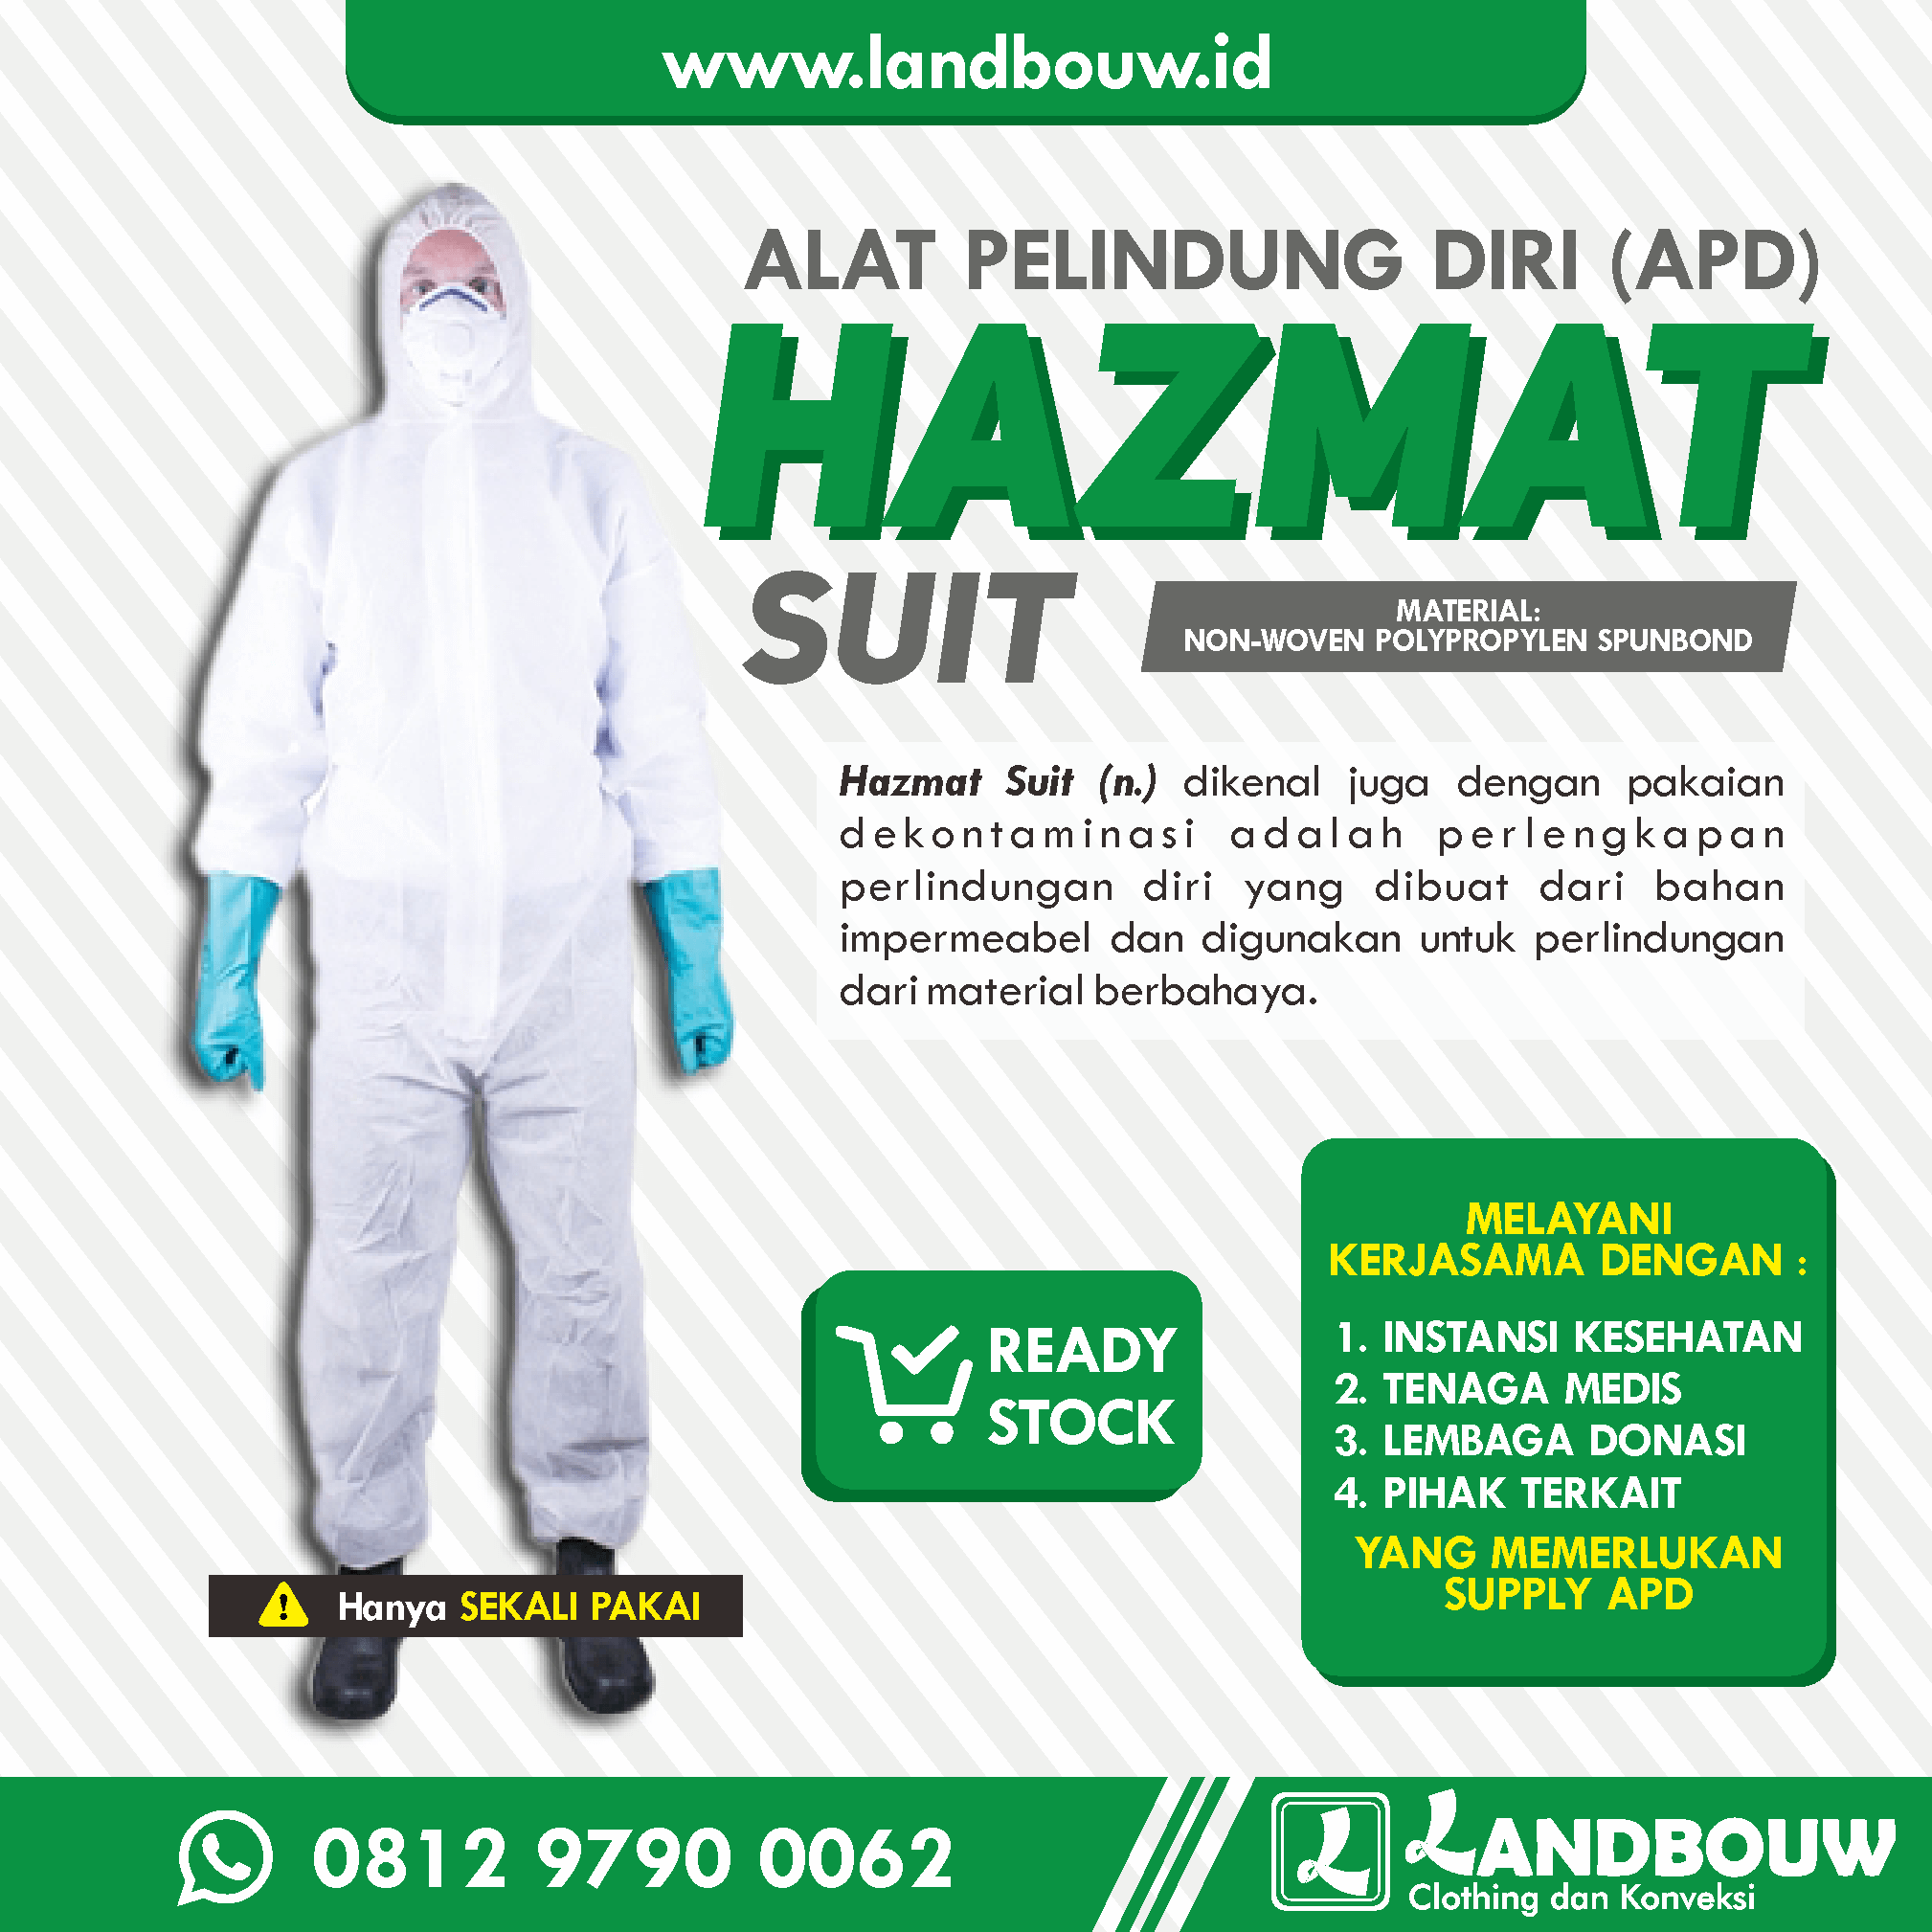 Ingin Tahu Supplier Pakaian APD Hazmat Suit? Order Di Landbouw Konveksi Segera di Sulawesi